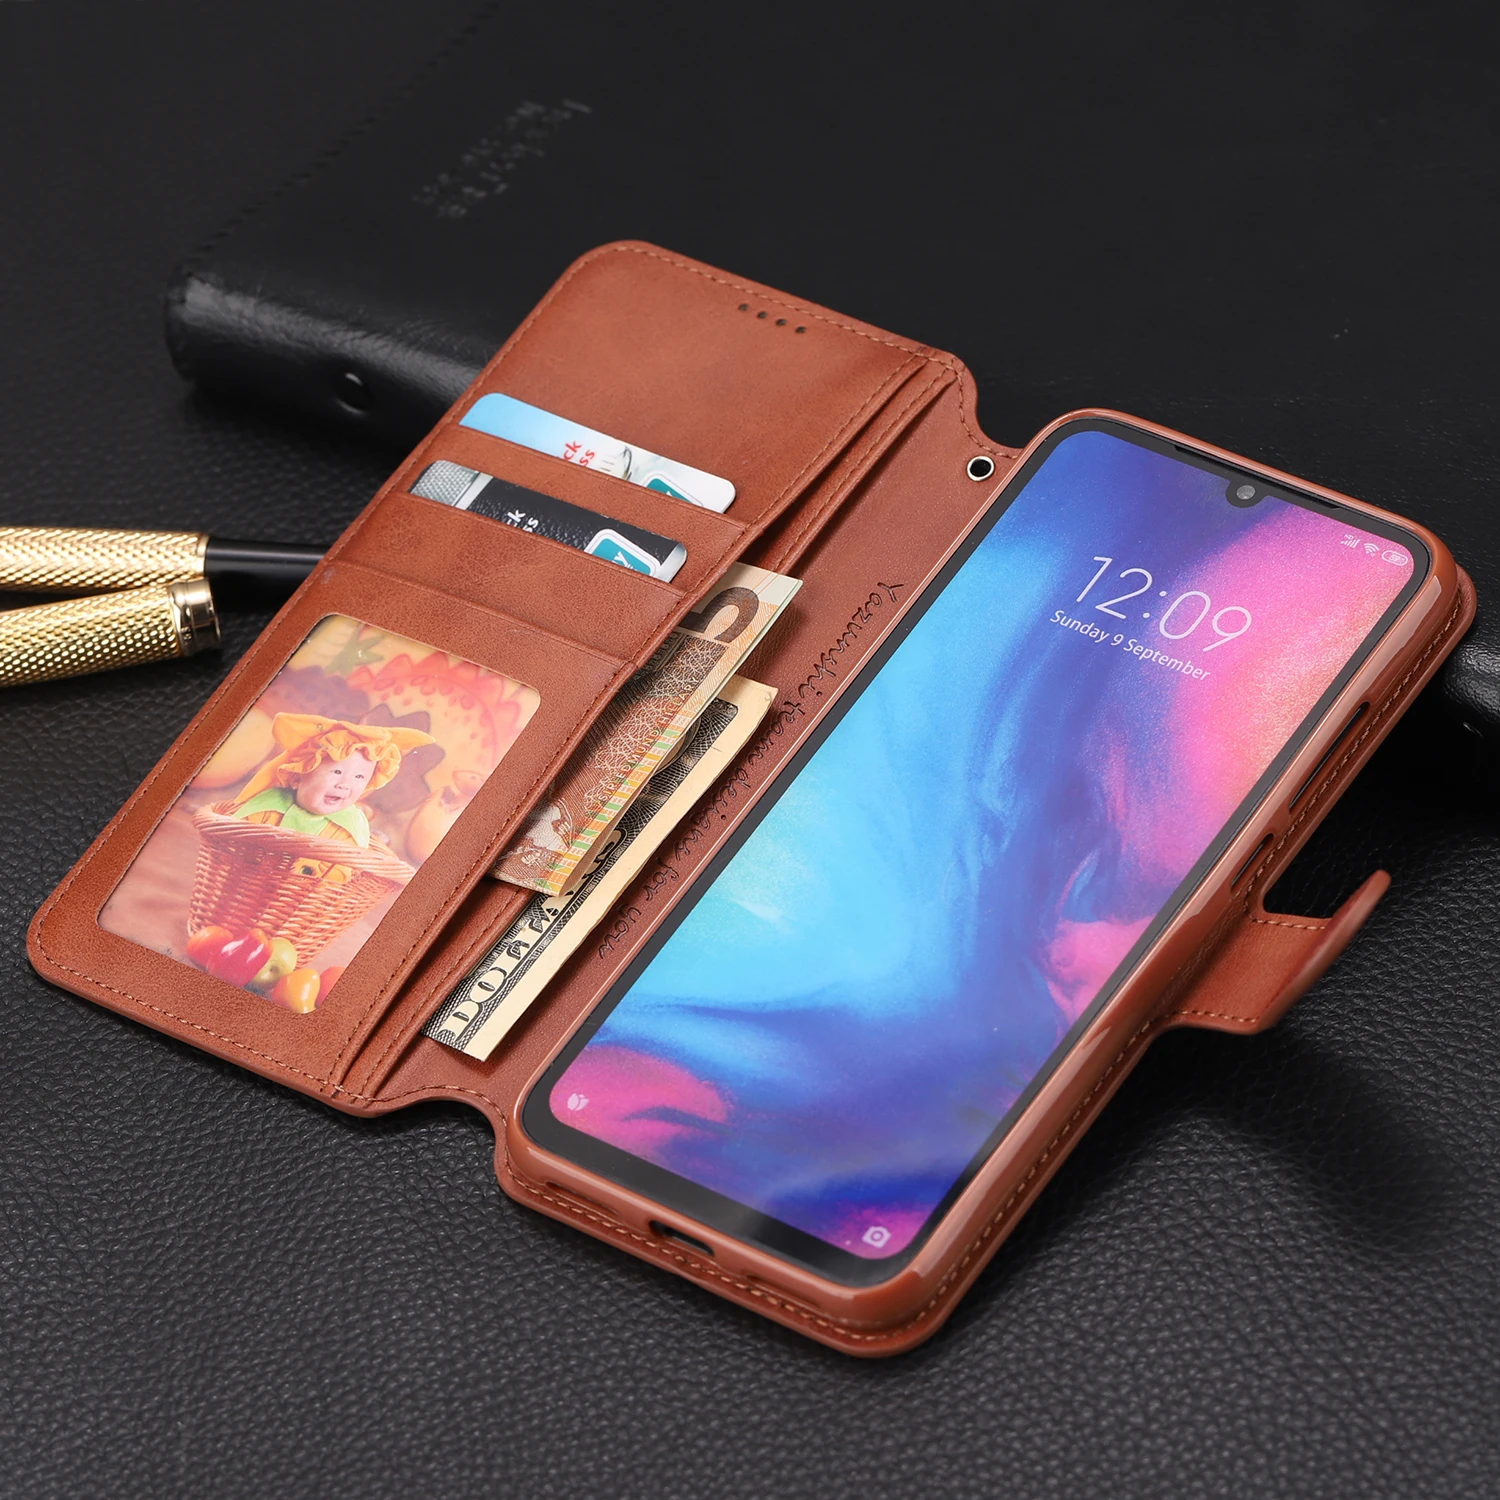 Кожаный флип-чехол для Xiao mi Red mi Note 7, 8, 6, 5 Pro, A2 Lite, чехол-кошелек для mi Red mi 6a 5 Plus, 6 Pro, держатель для карт, Global Coque